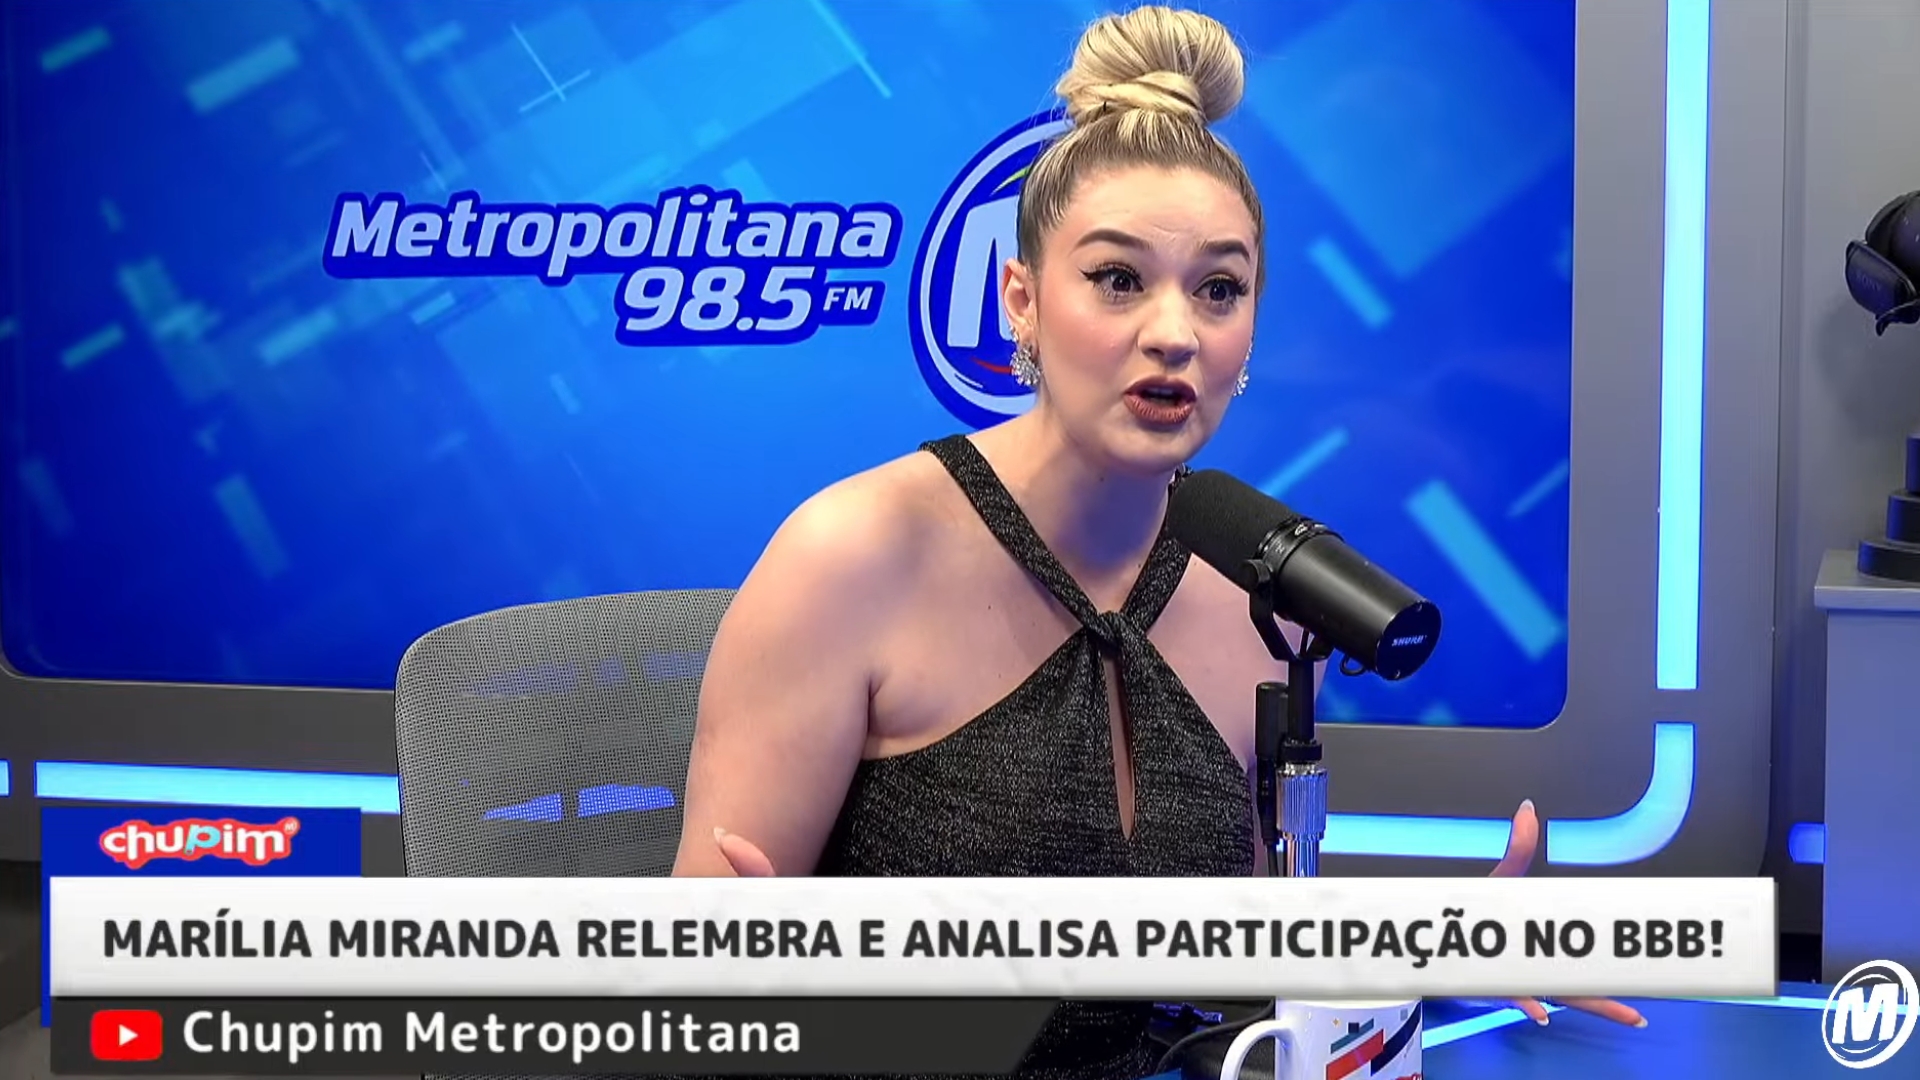 Vai para ‘A Fazenda’?! Marília Miranda revela se vai participar de outros realitys shows - Metropolitana FM